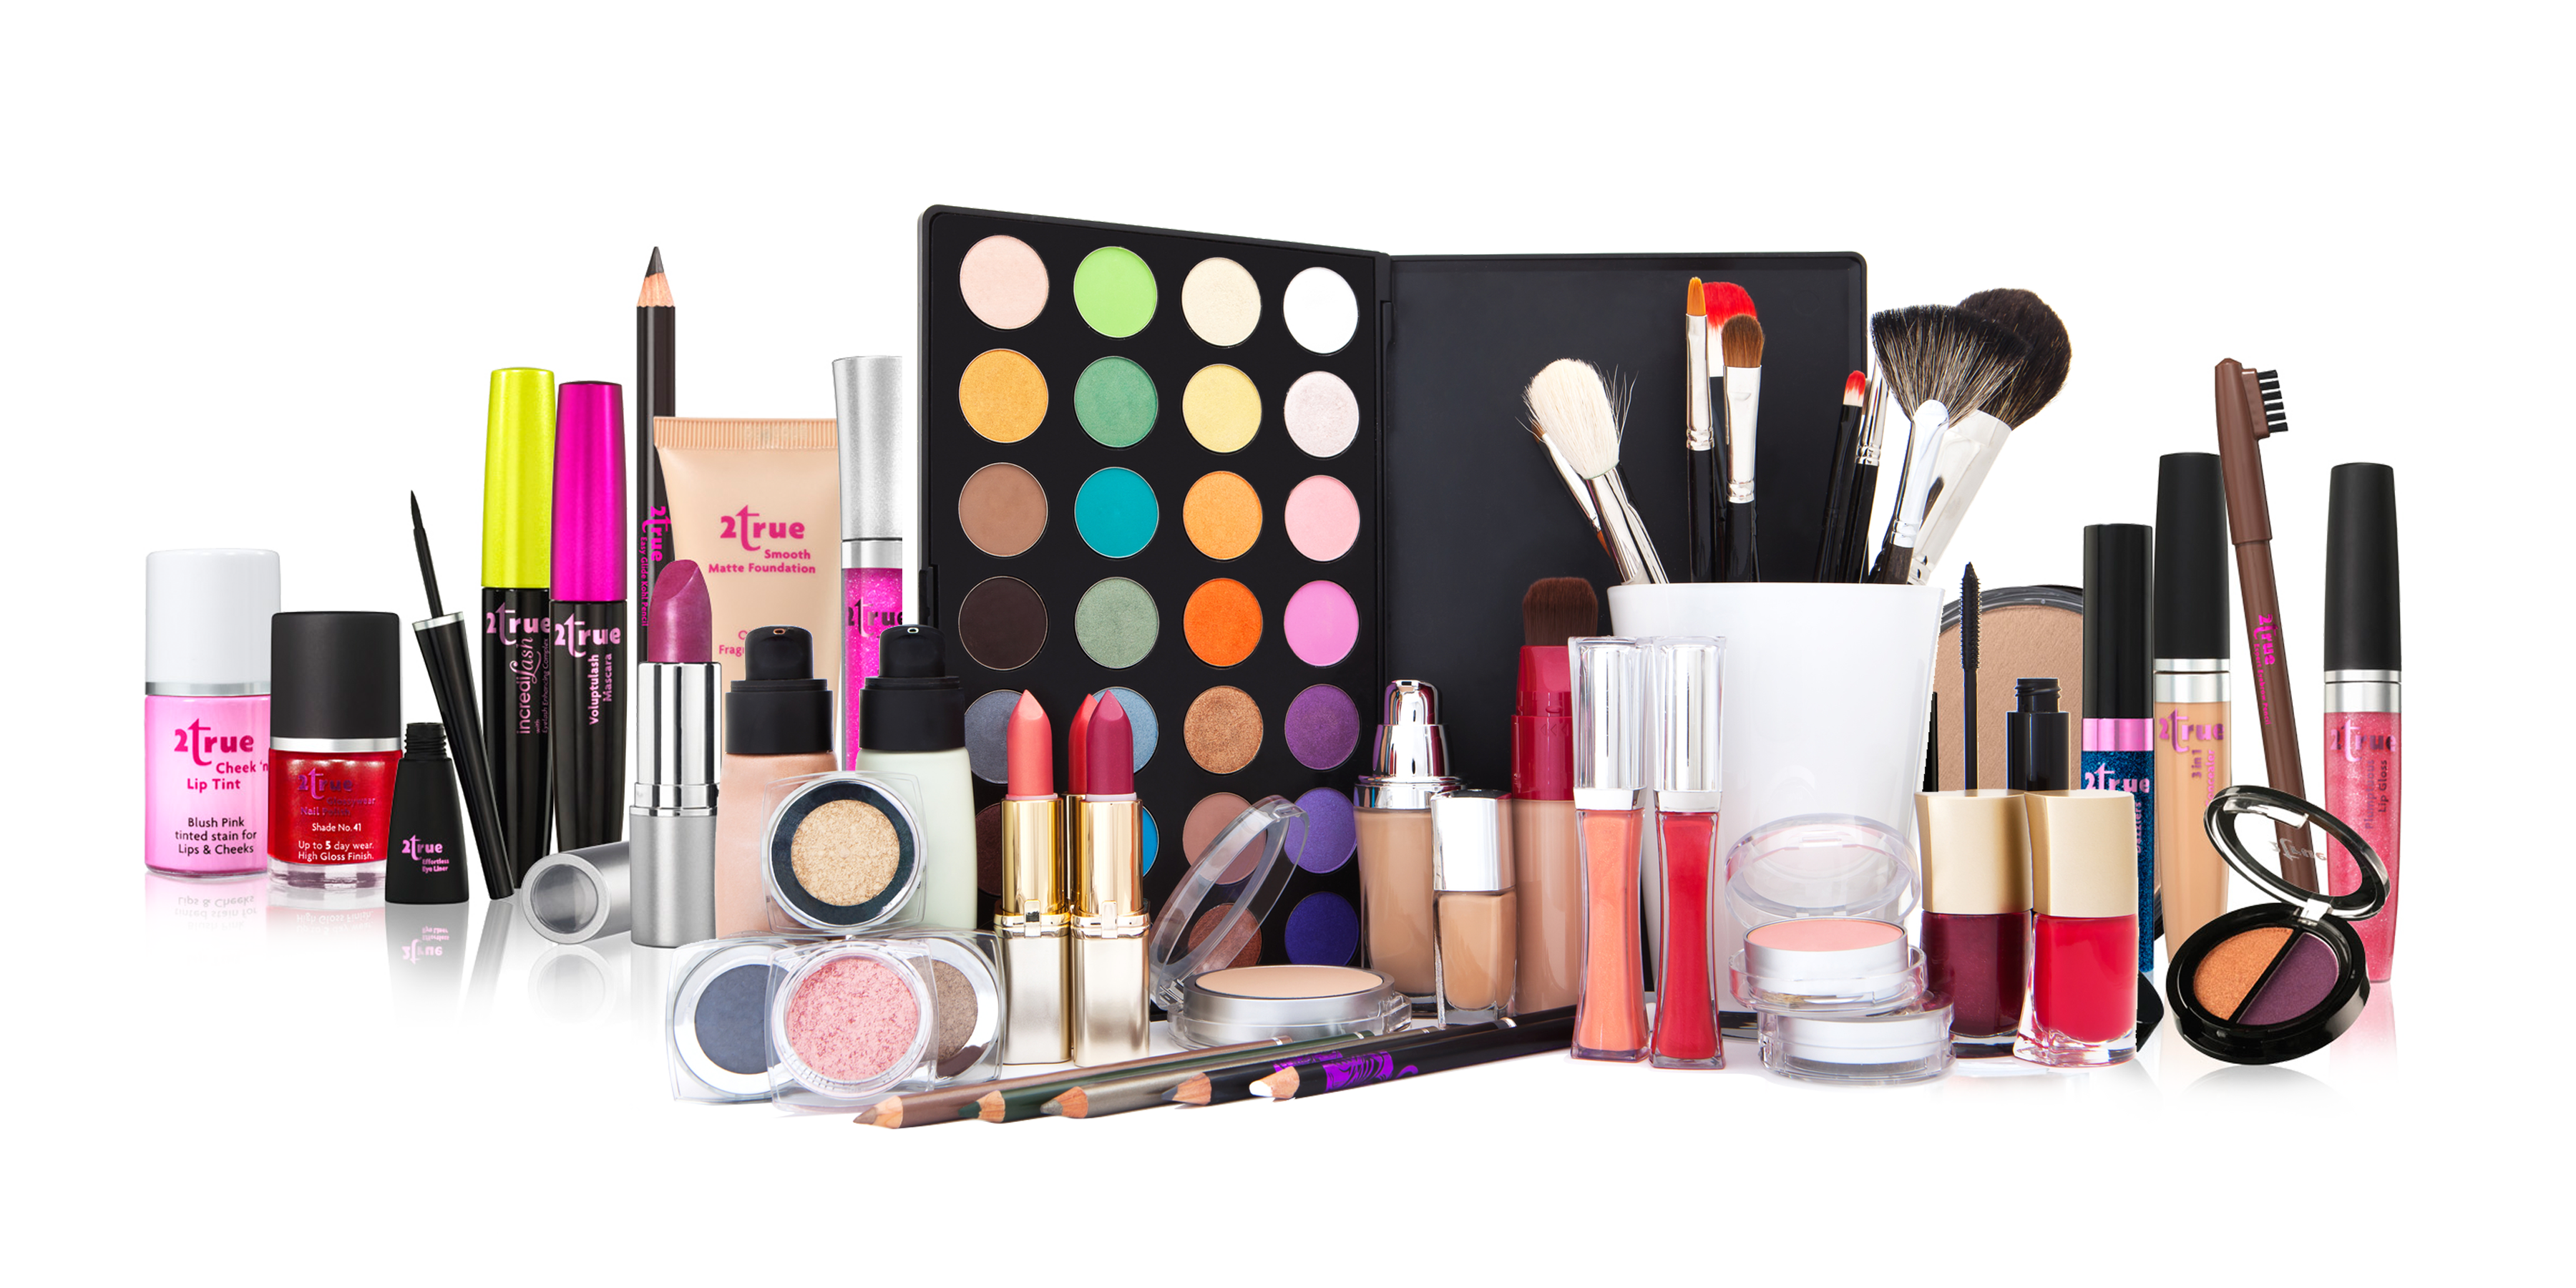 Download Product Pic Cosmetics HD Image Free HQ PNG Image | FreePNGImg